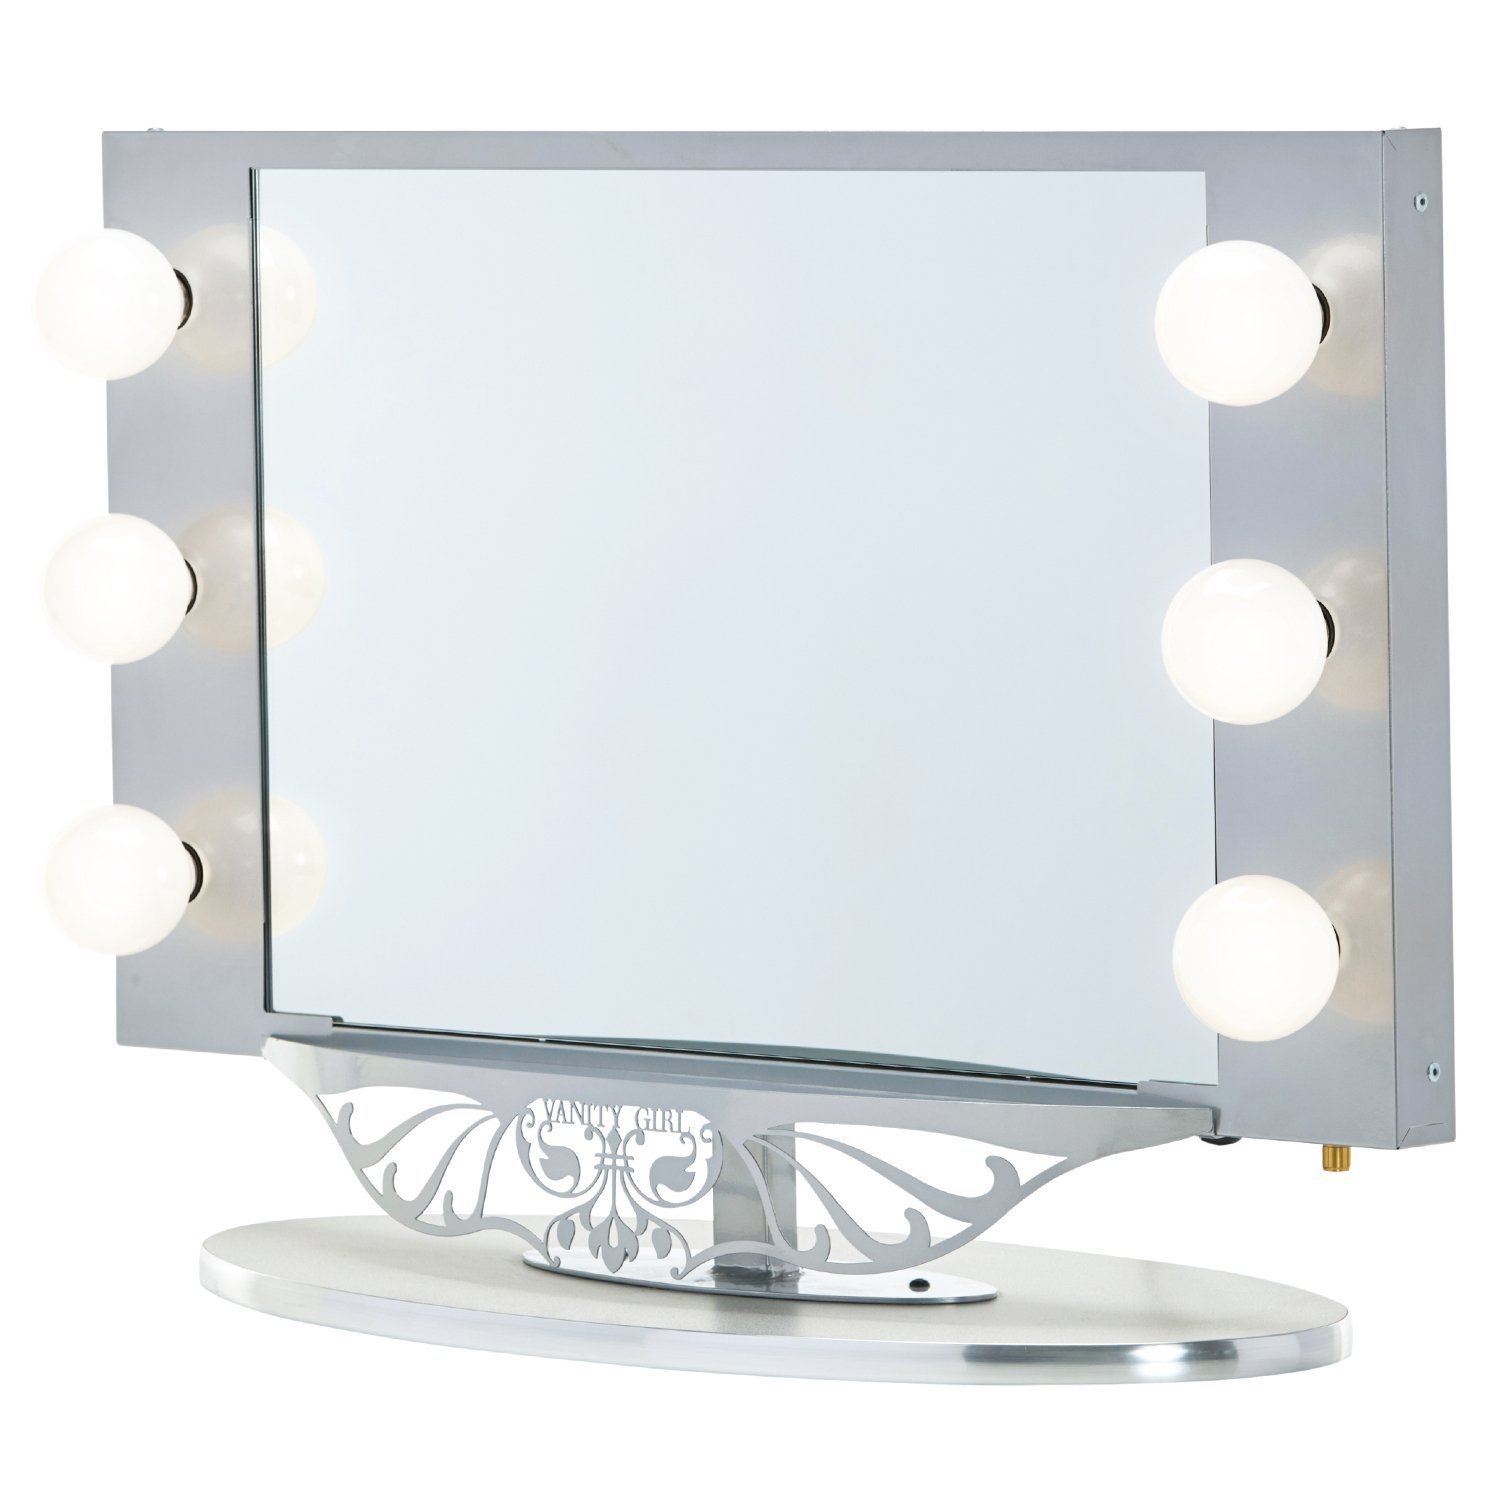 Vanity Girl Hollywood Starlet Lighted Vanity Mirror Gloss White, 34" x 23"